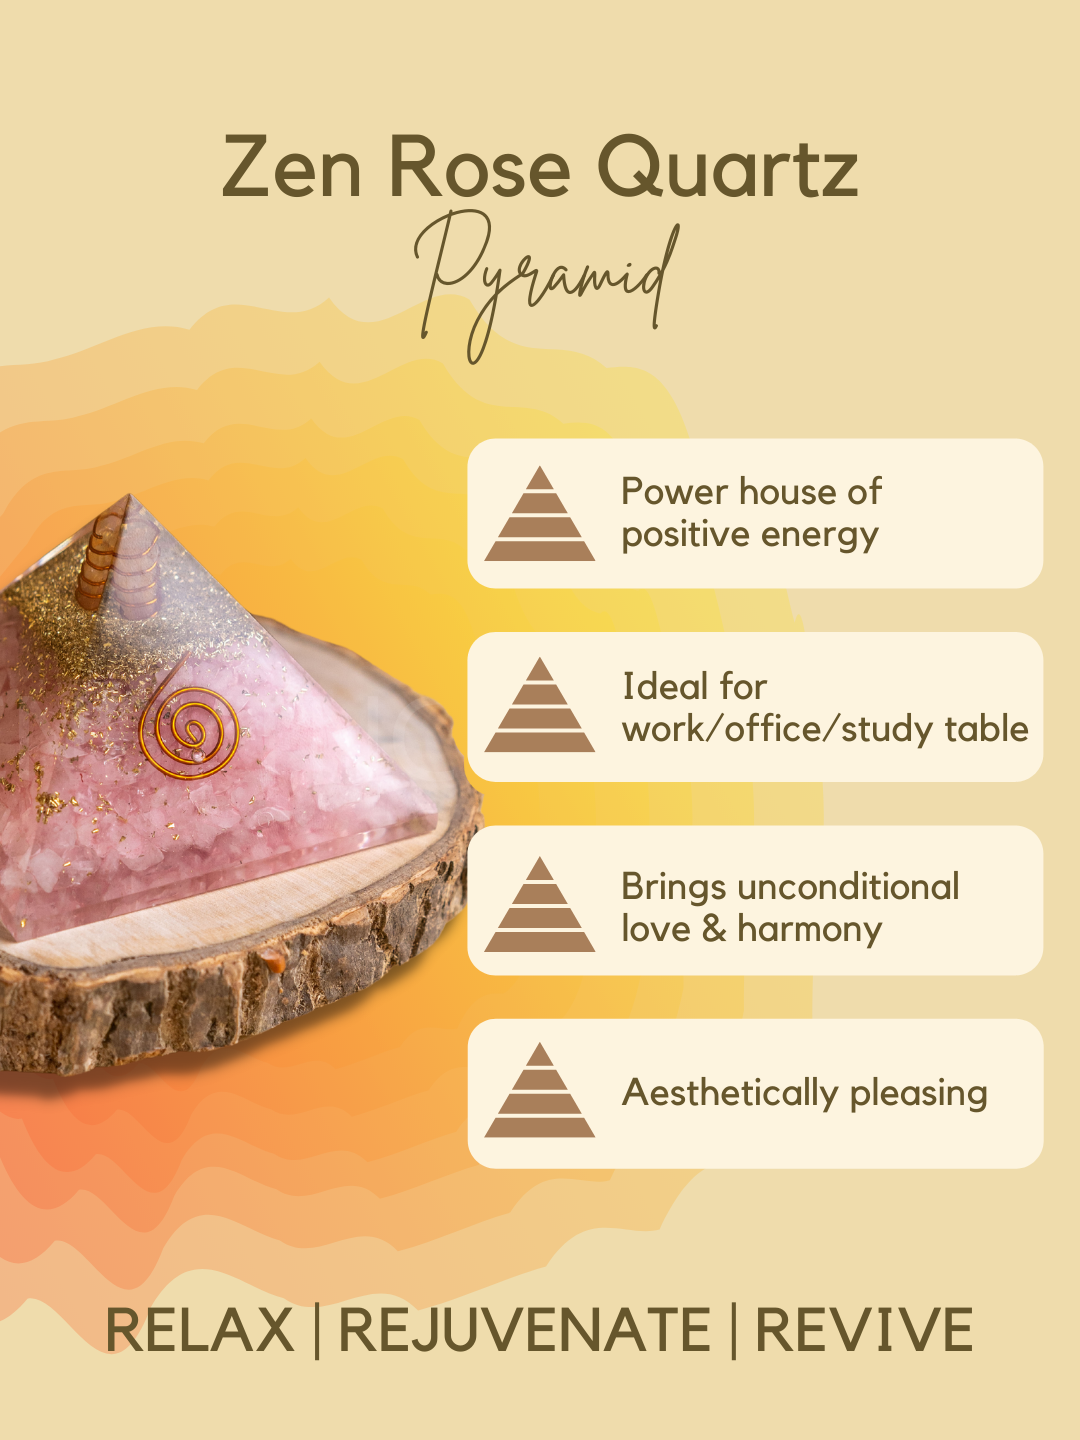 Zen Rose Quartz Orgonite Pyramid For Love, Trust & Harmony in Relationship The Zen Crystals